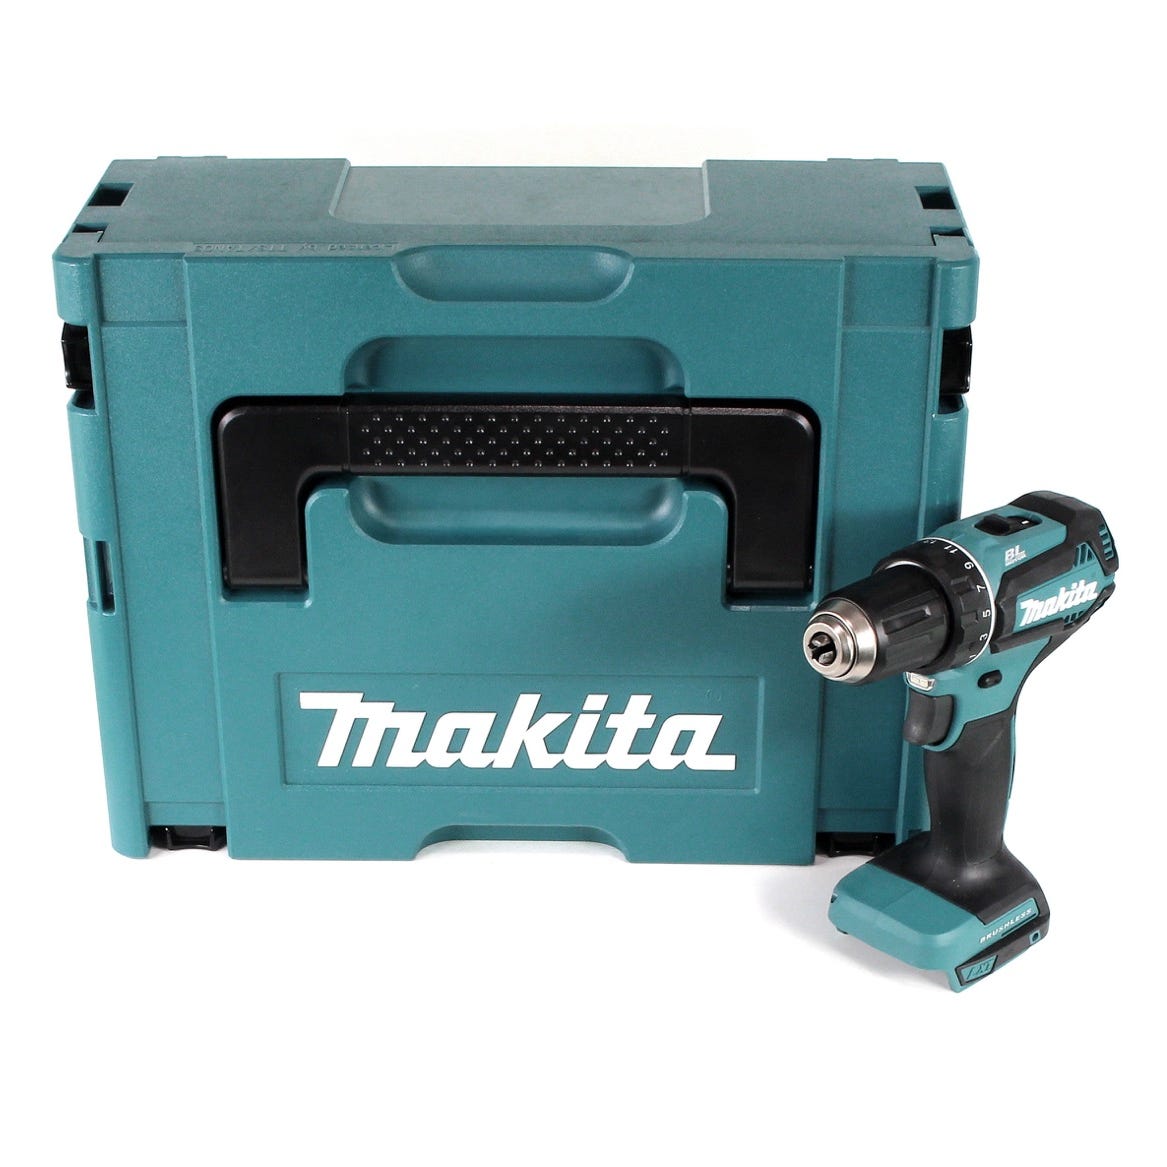 Makita DDF 485 ZJ 18 V Li-Ion Perceuse visseuse sans fil Brushless 13 mm + Coffret MakPac - sans Batterie, sans Chargeur 0